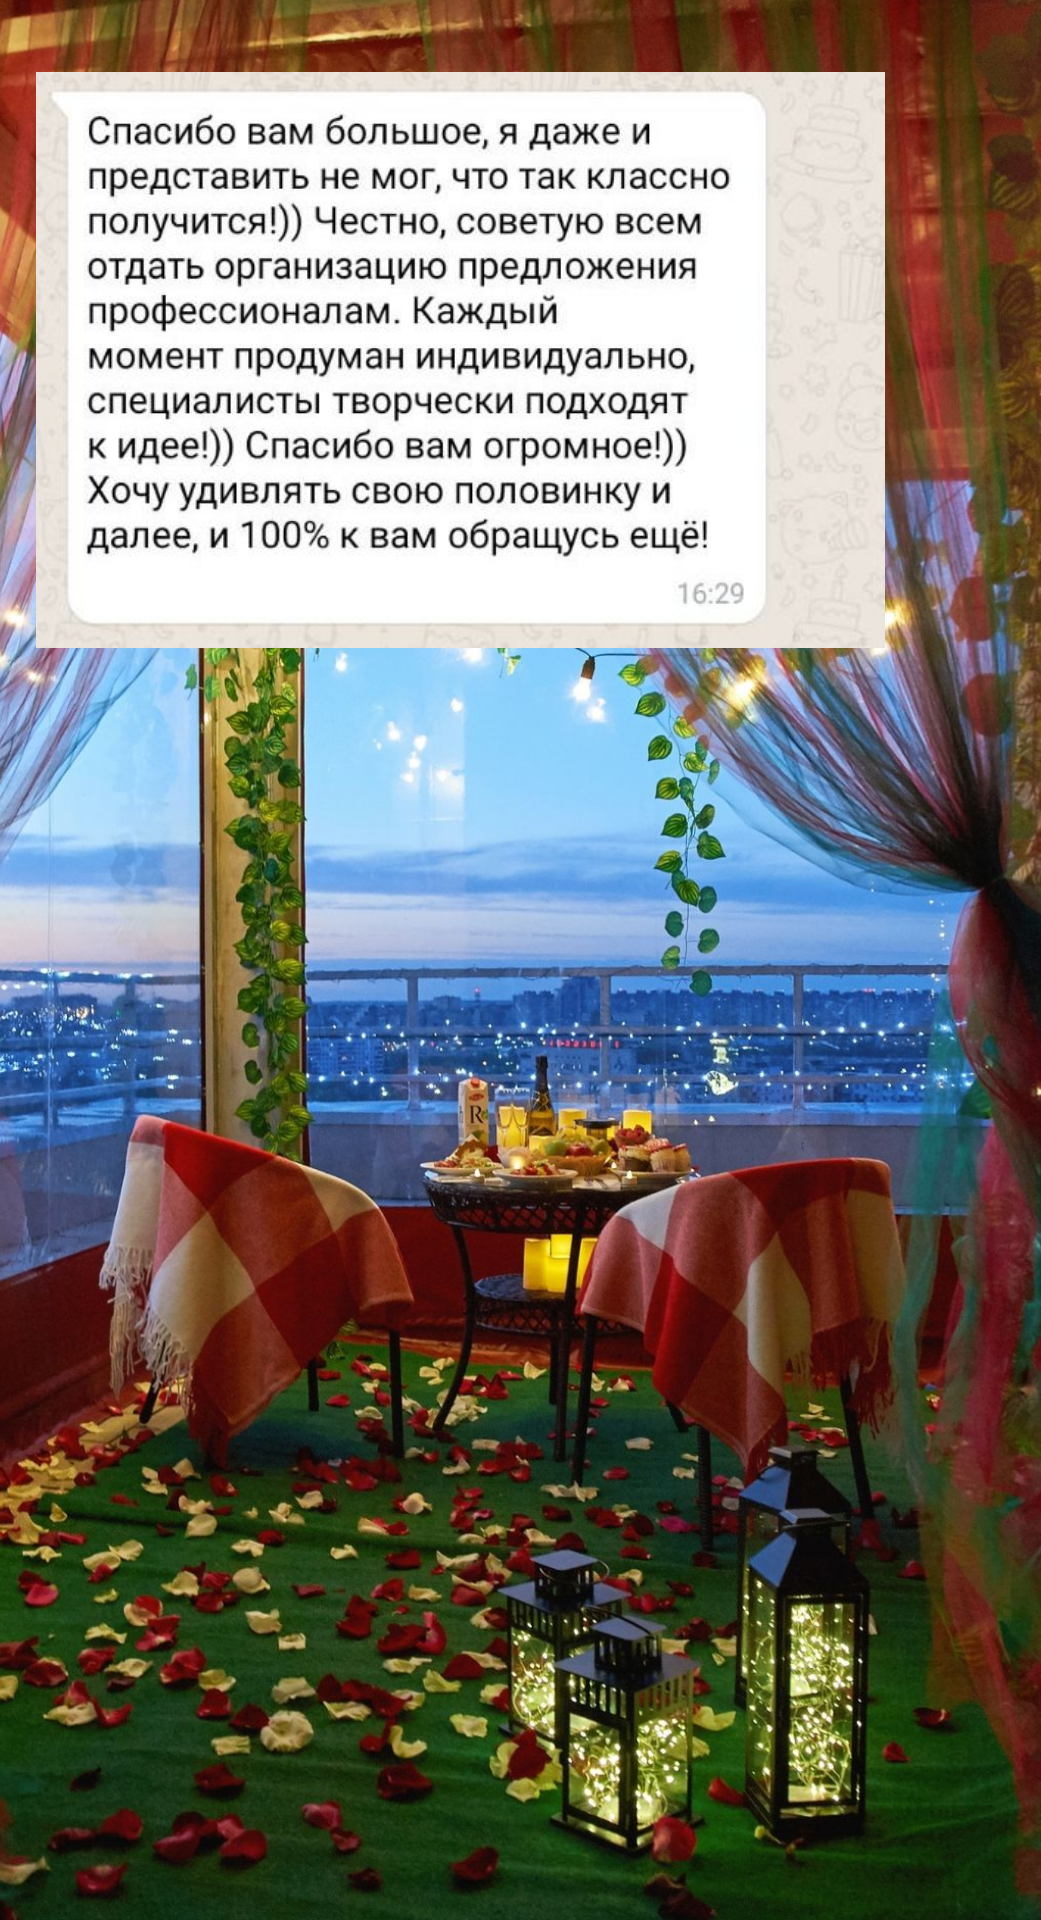 Организация предложения руки и сердца в Екатеринбурге
от компании Pandaevent